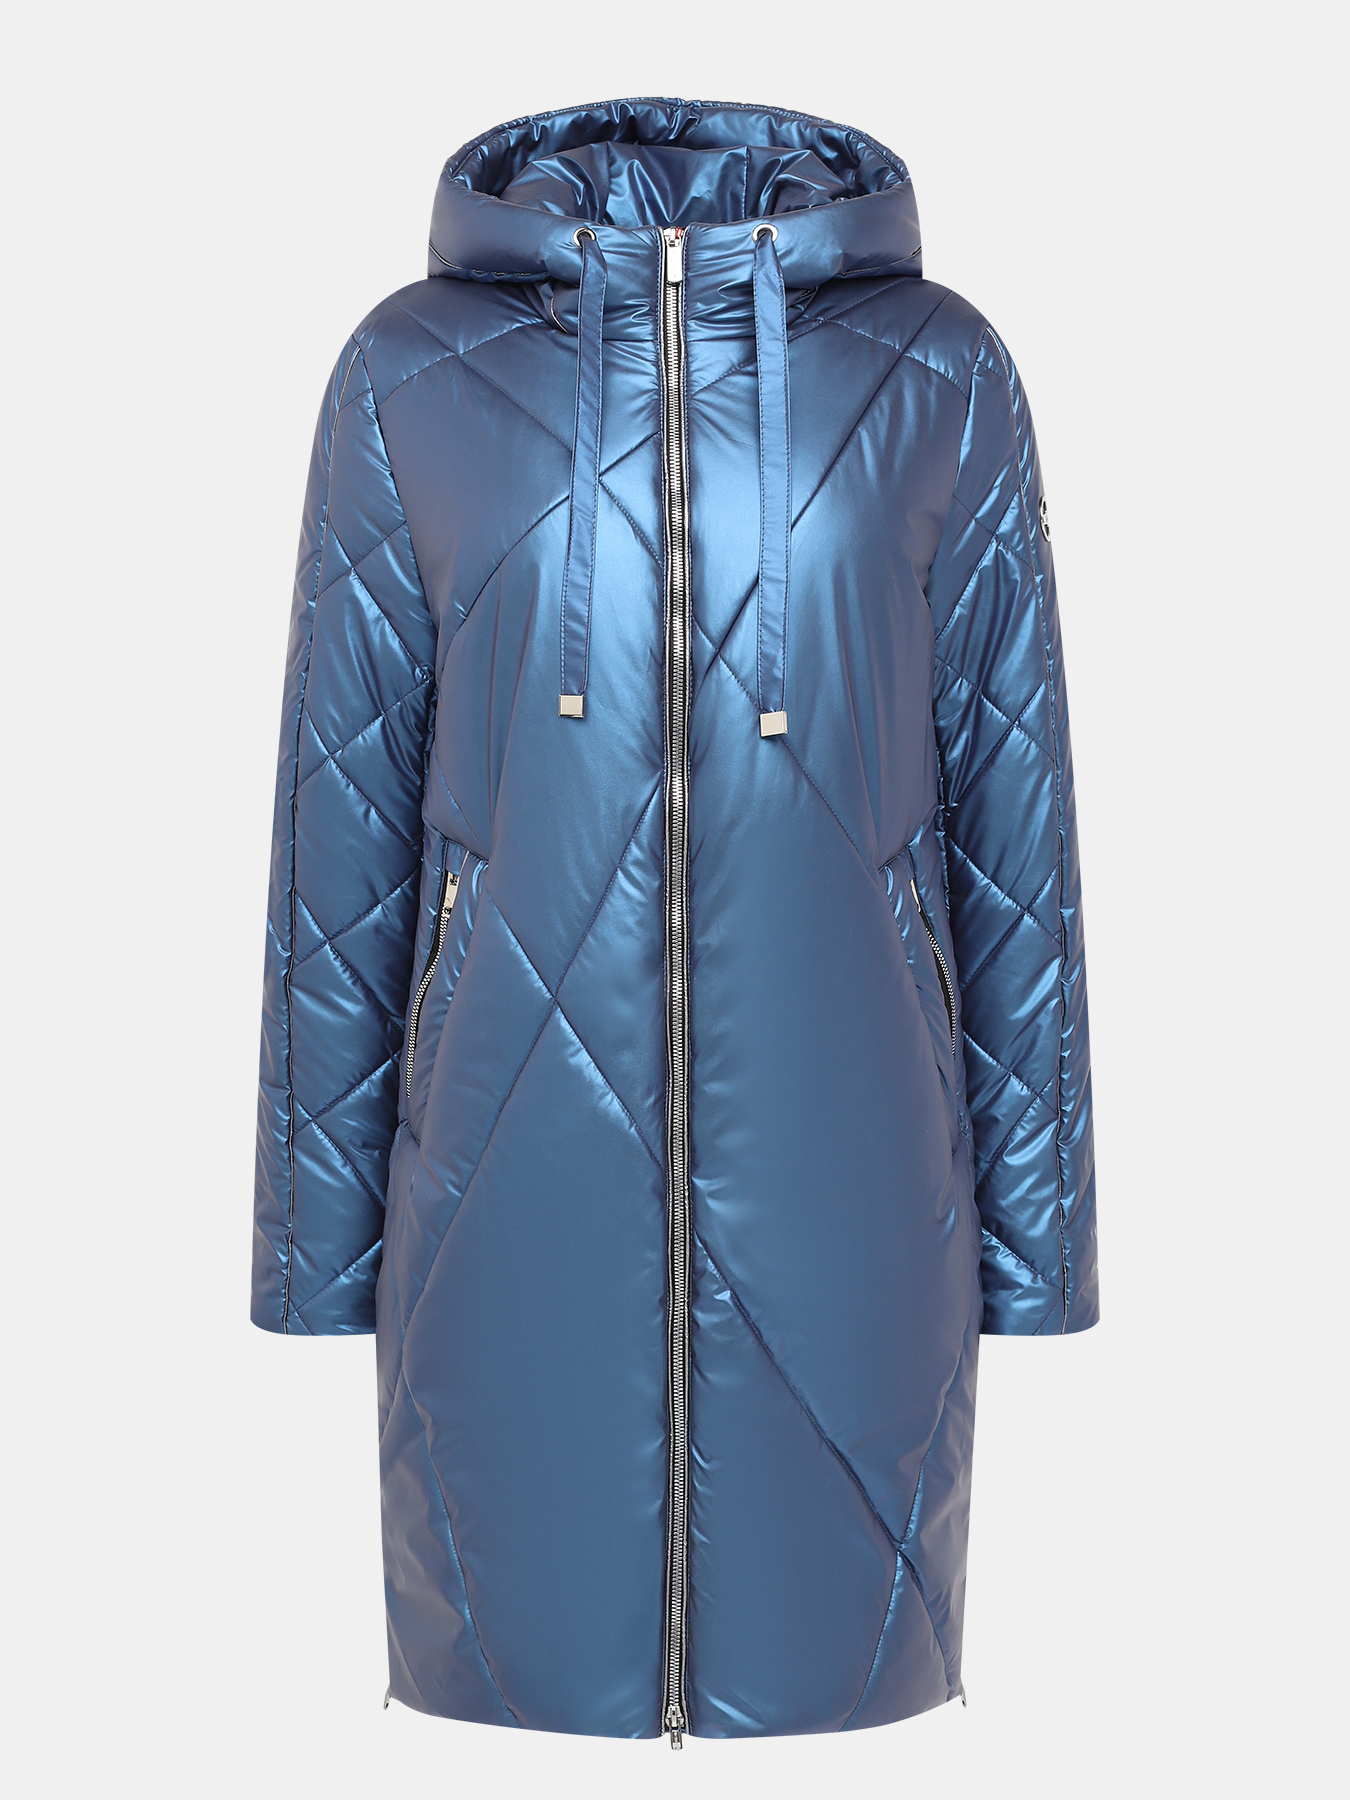 Пальто зимнее Maritta 433572-022, цвет синий, размер 48 - фото 1